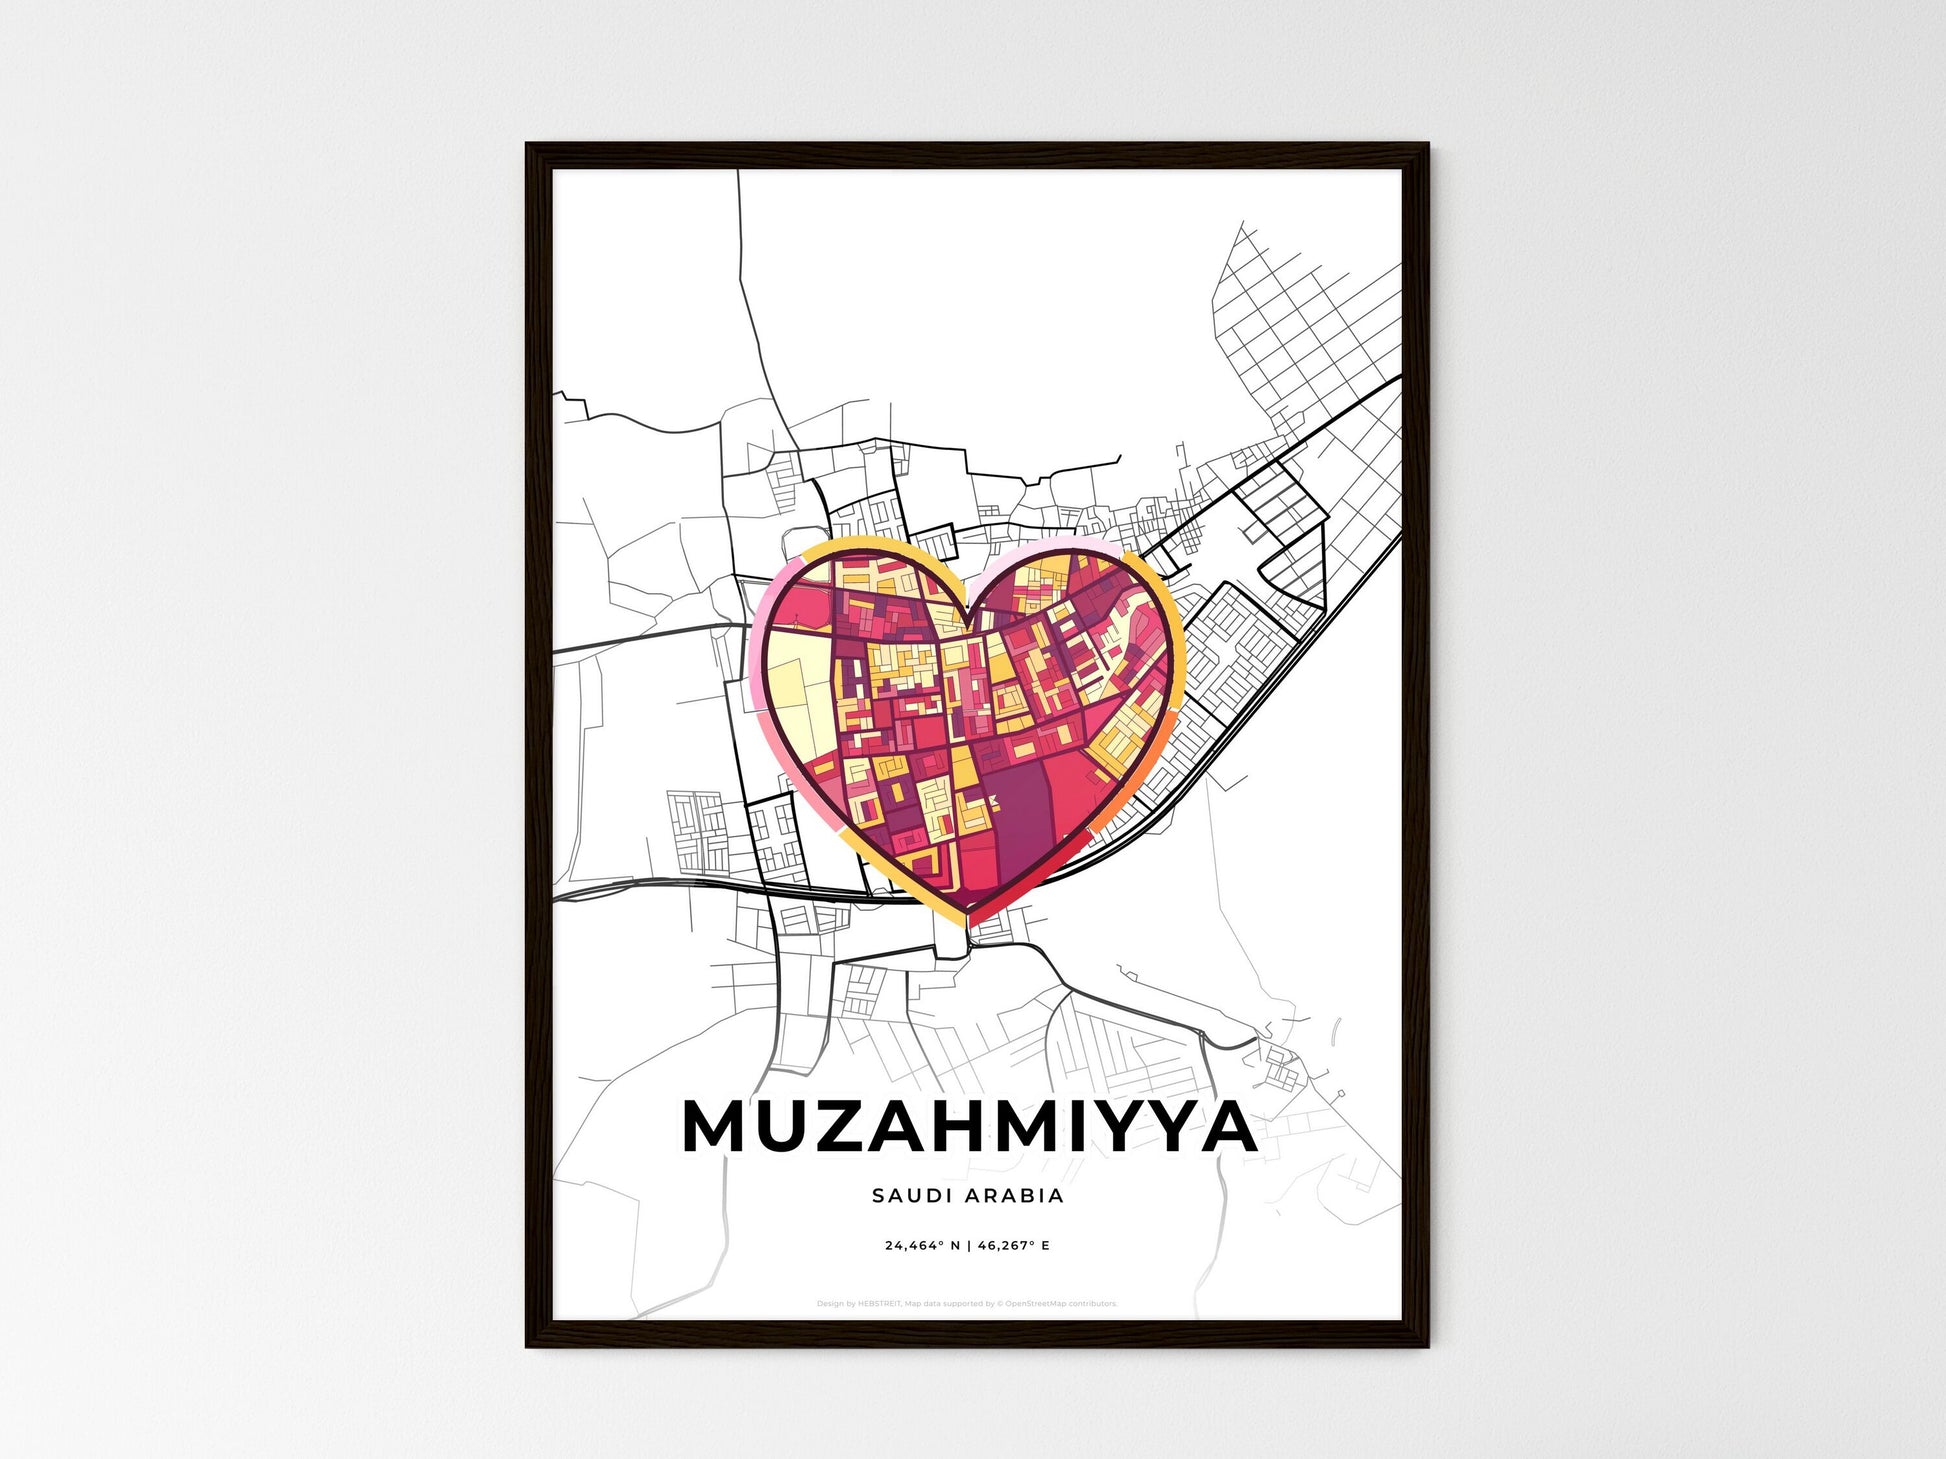 MUZAHMIYYA SAUDI ARABIA minimal art map with a colorful icon. Style 2